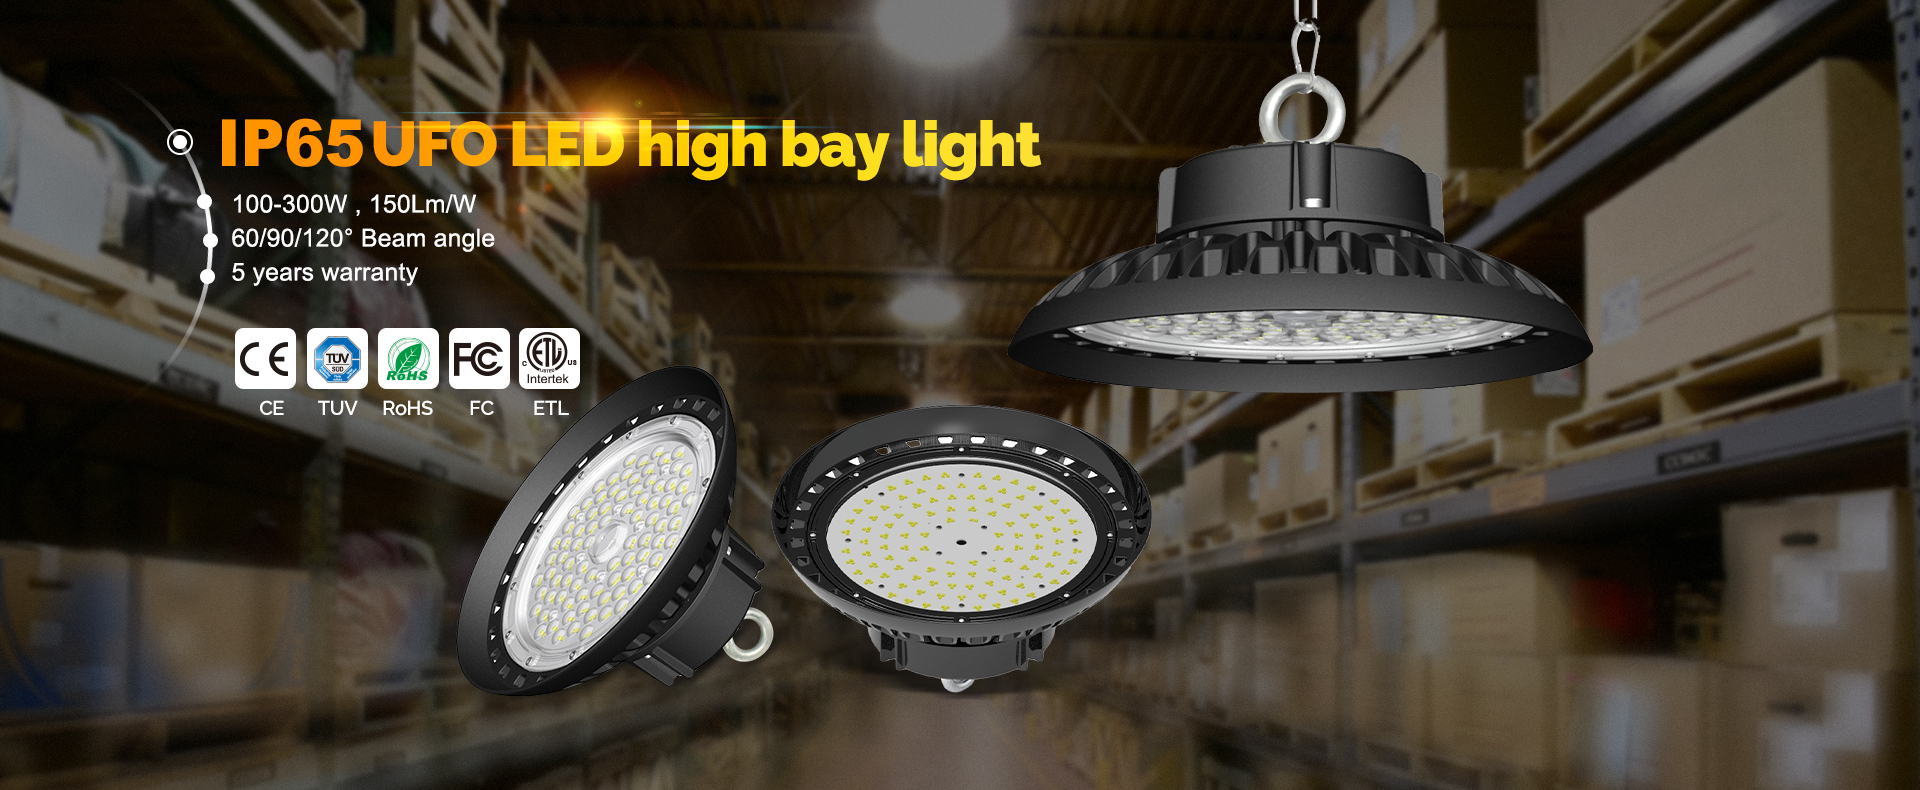 UFO LED High Bay Light